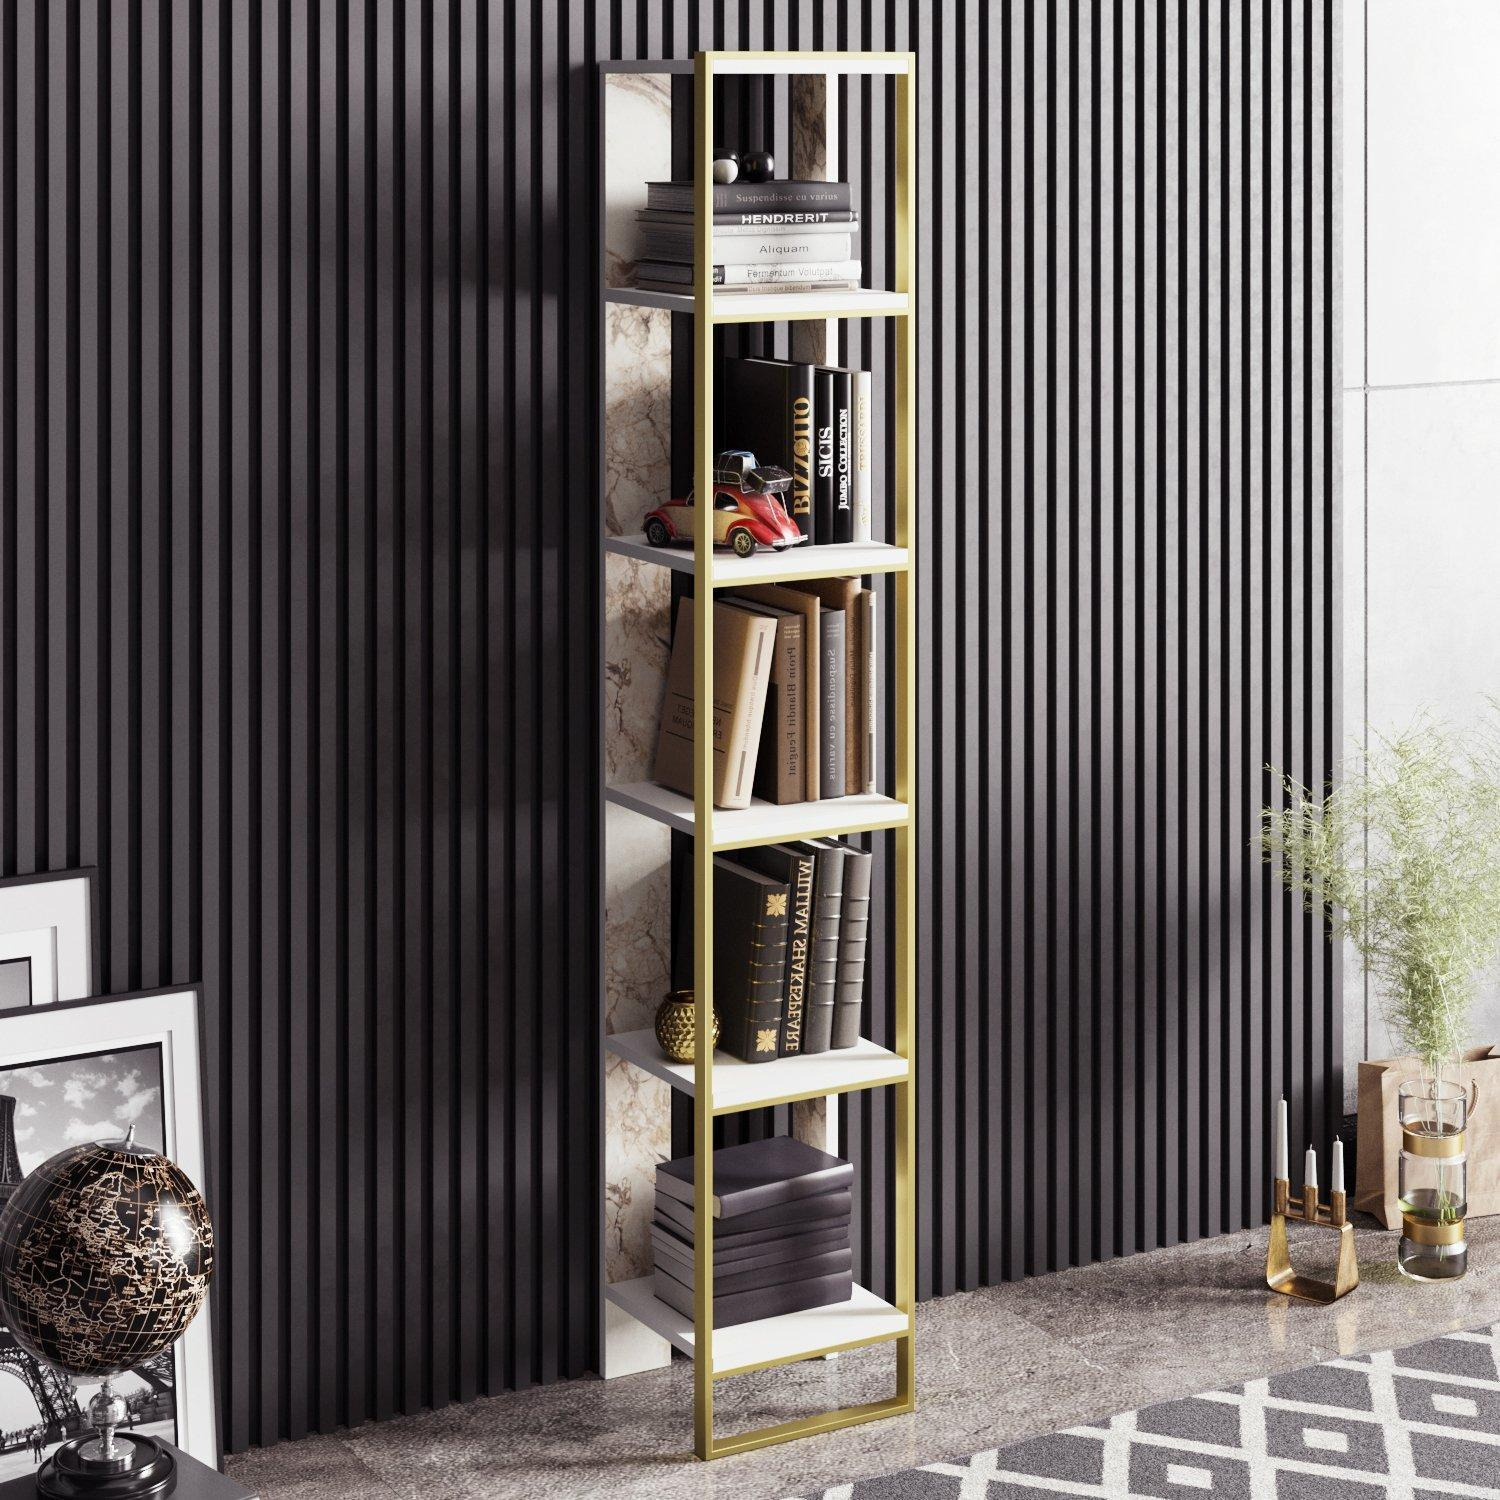 Polka 5-tier Bookcase Shelving Unit - image 1